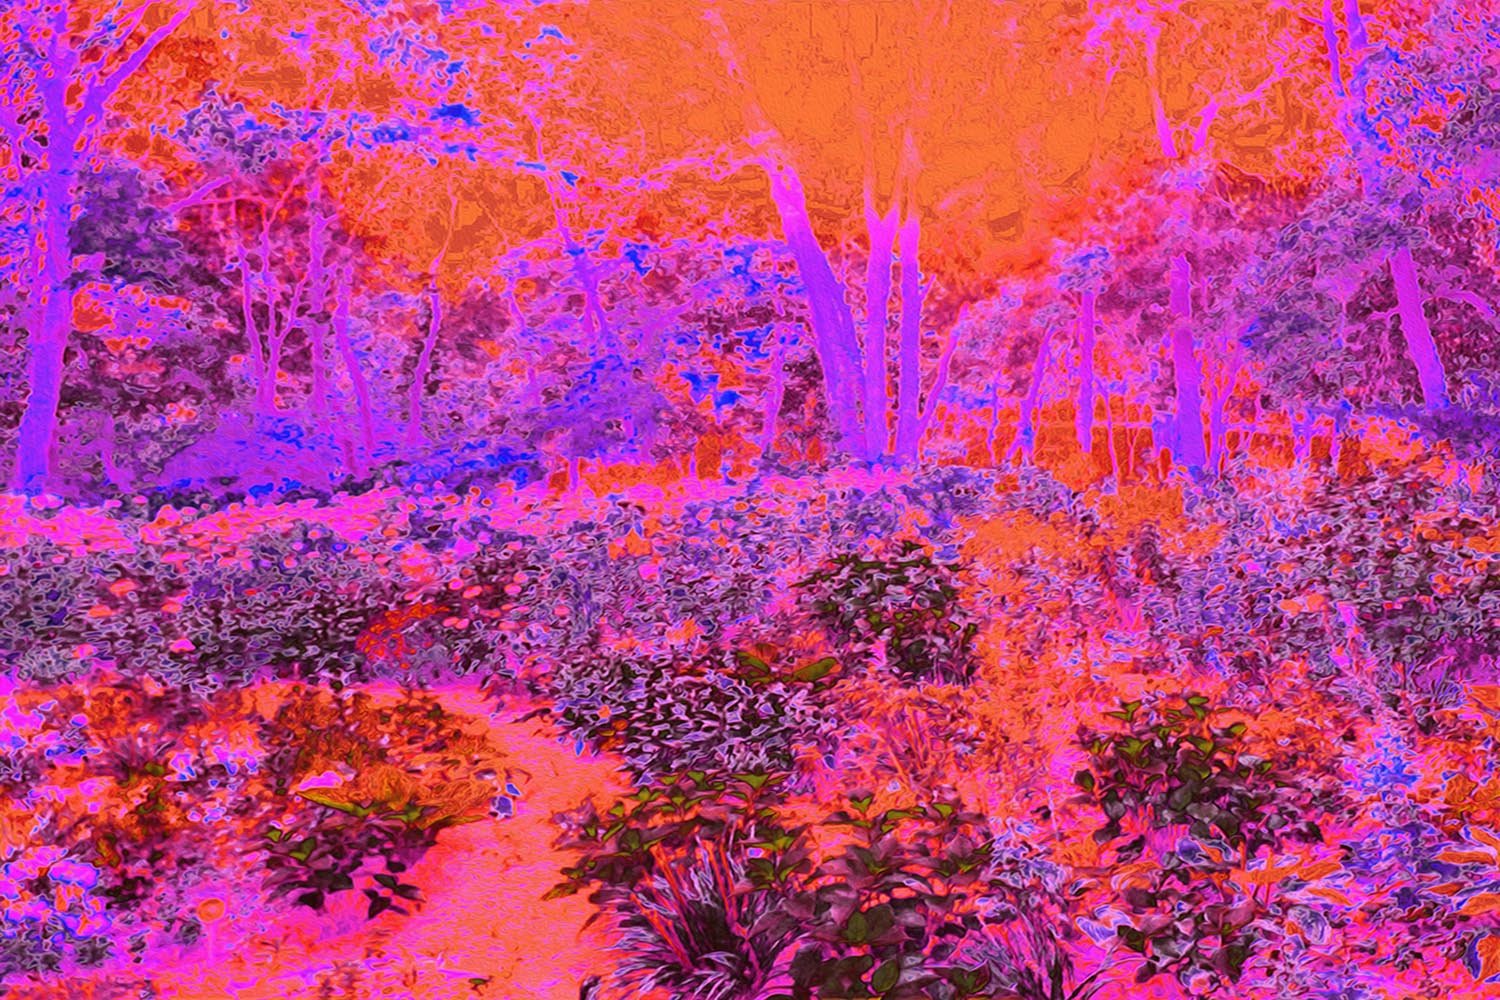 Trippy Magenta and Orange Impressionistic Garden